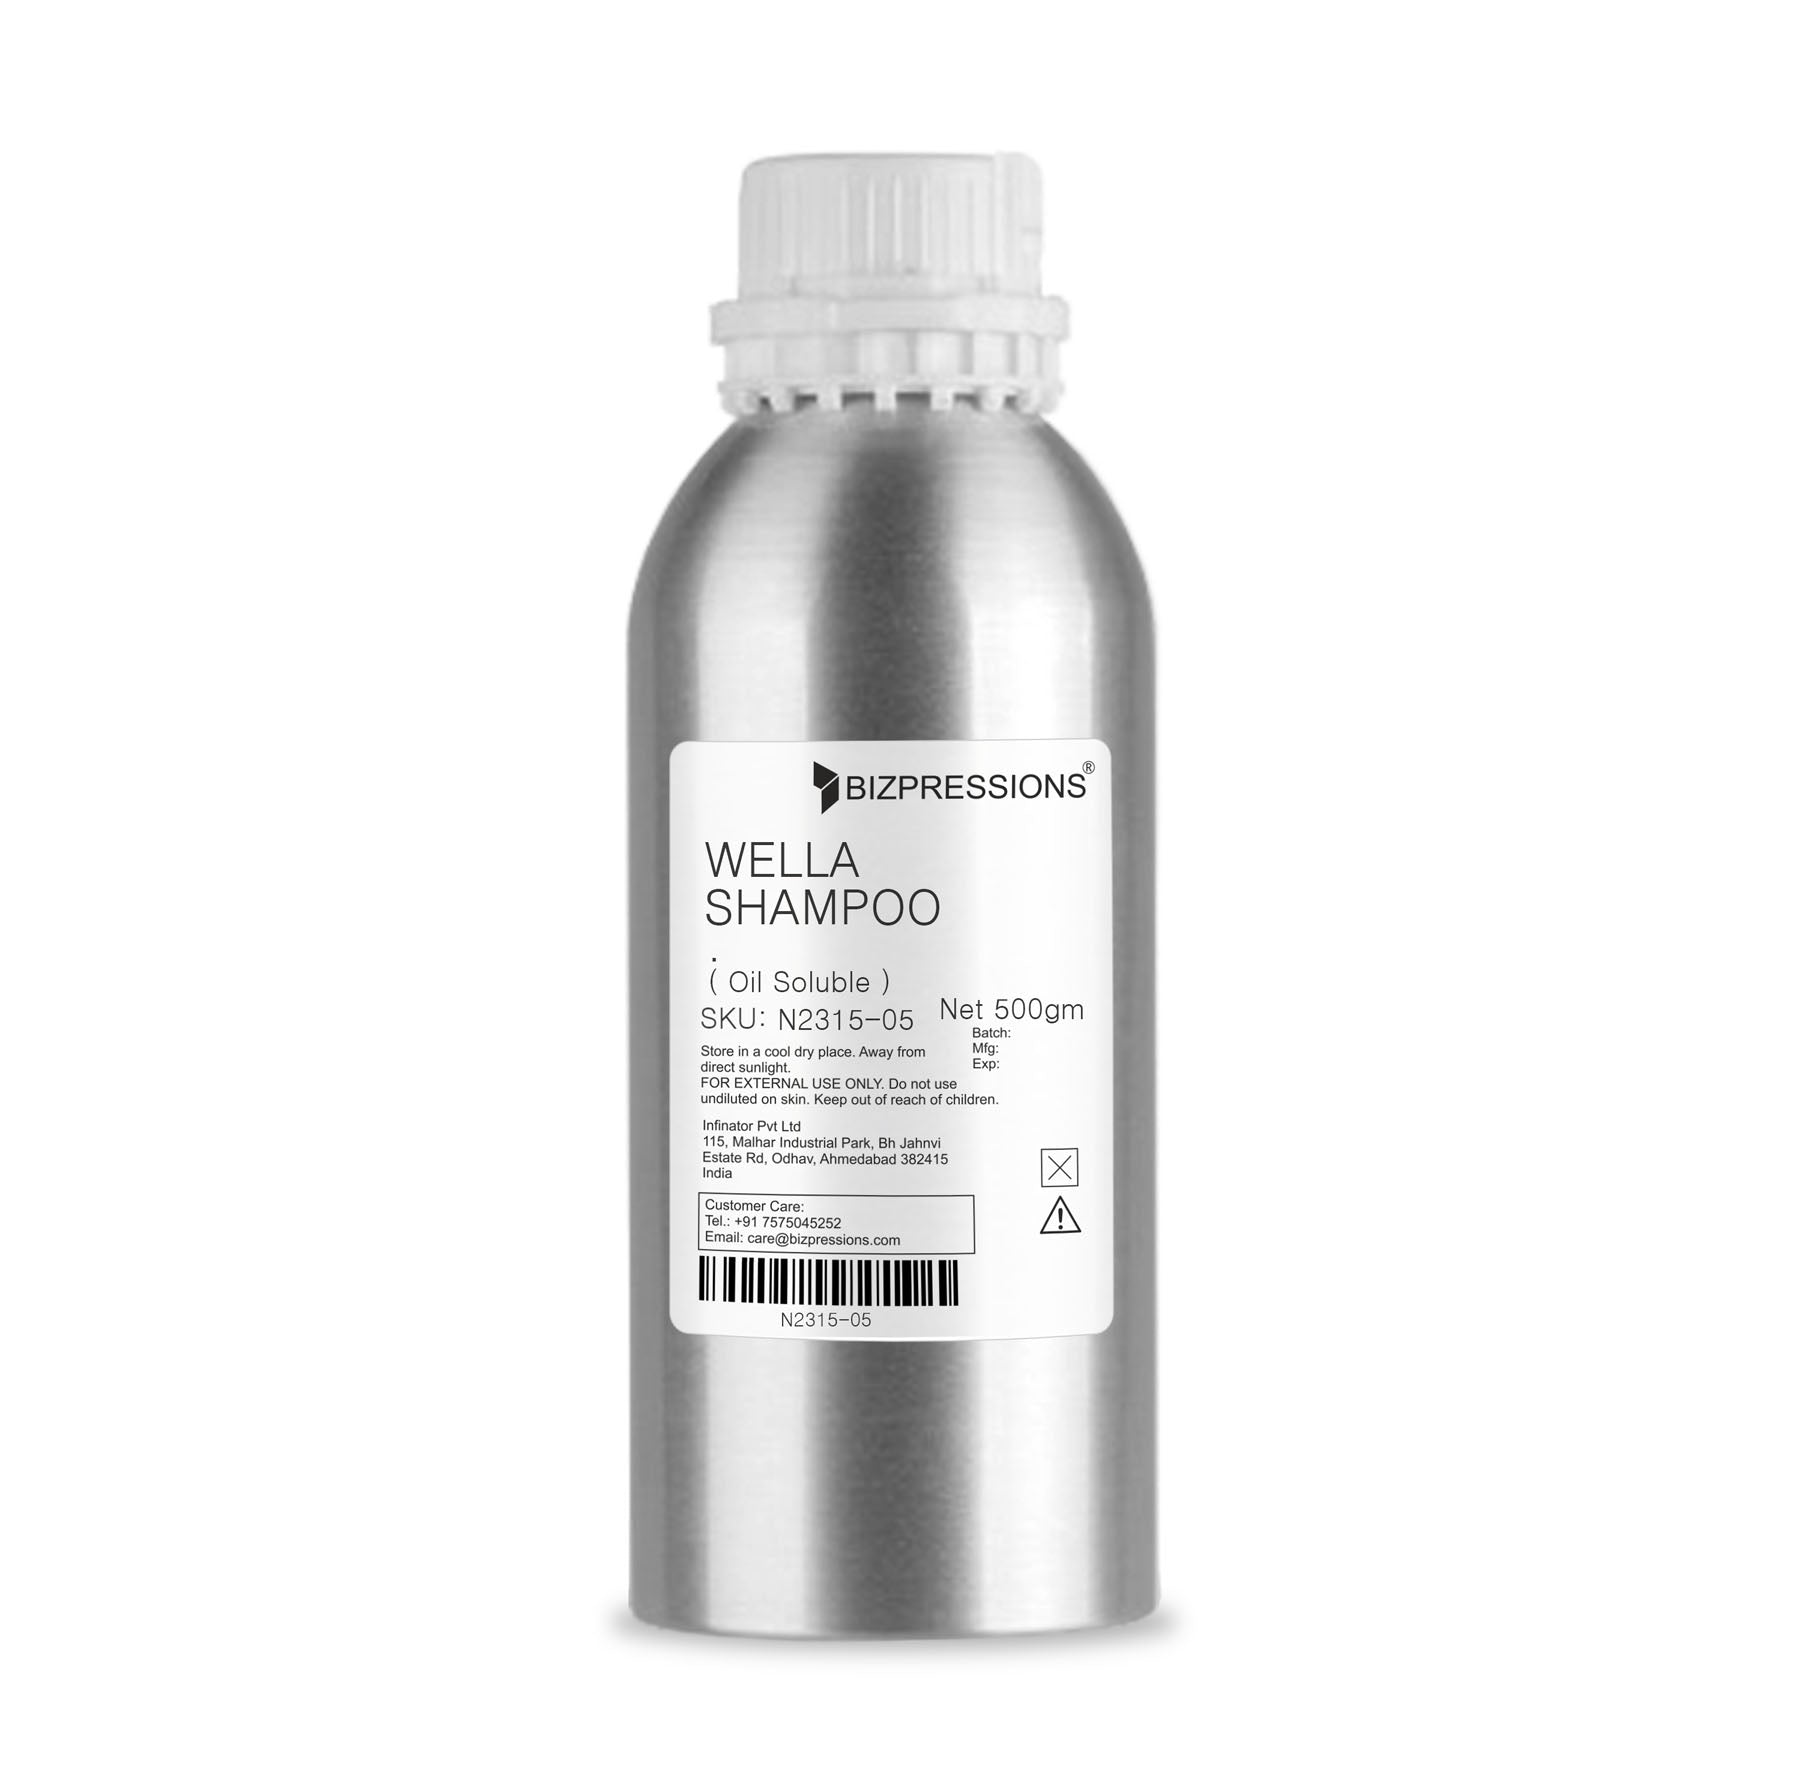 WELLA SHAMPOO - Fragrance ( Oil Soluble ) - 500 gm